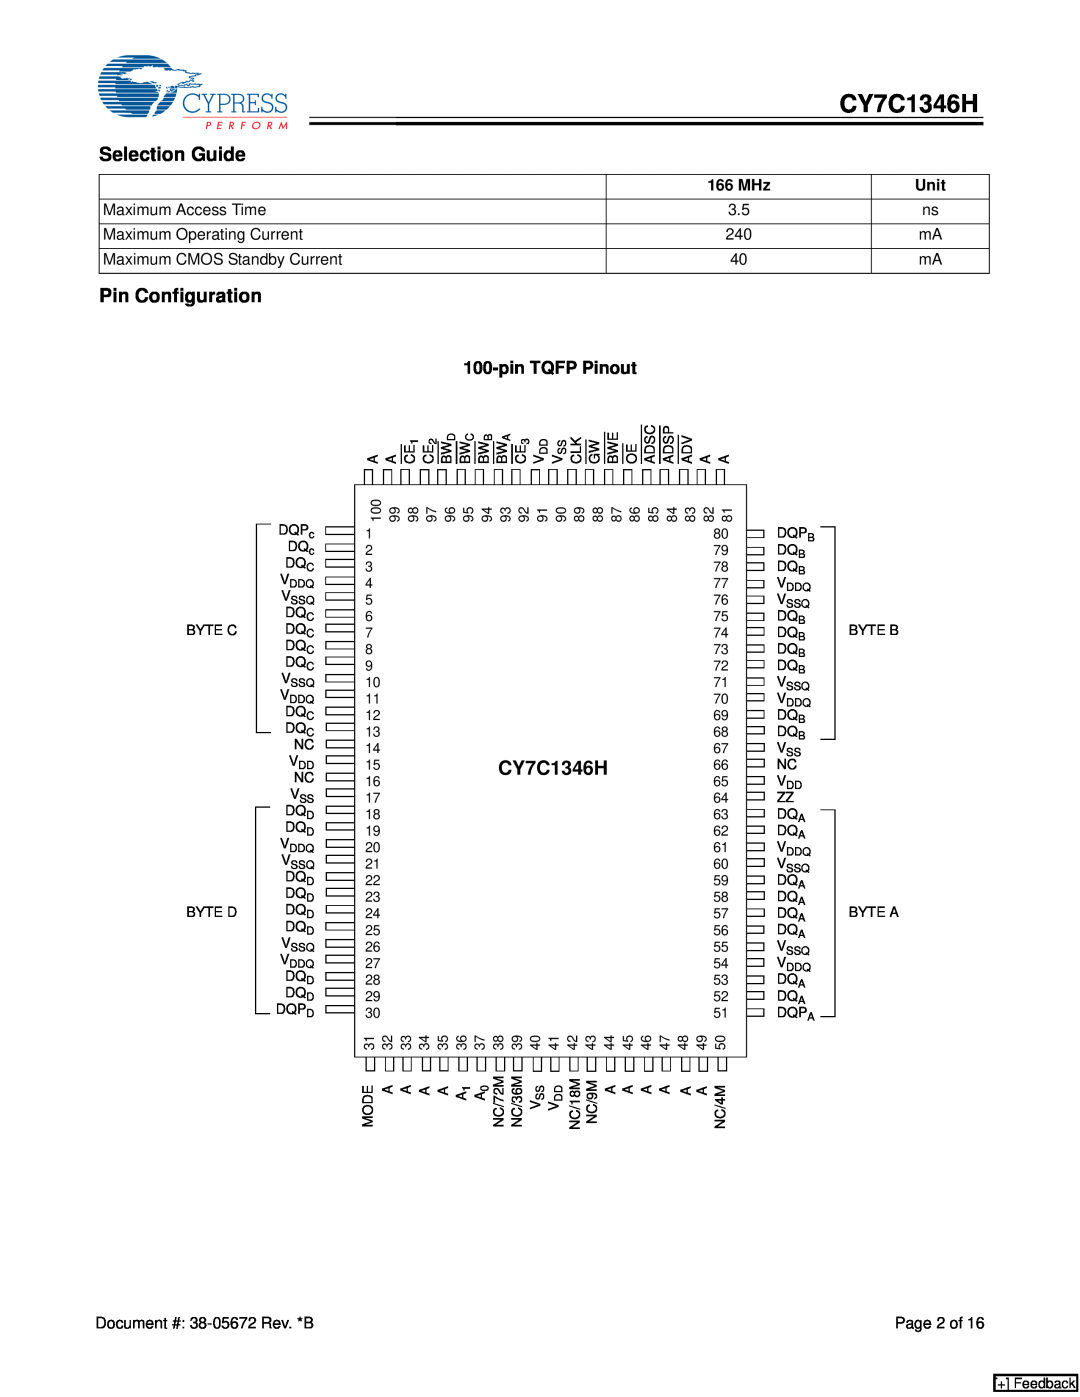 Cypress CY7C1346H manual Selection Guide, Pin Configuration, pin TQFP Pinout, + Feedback 